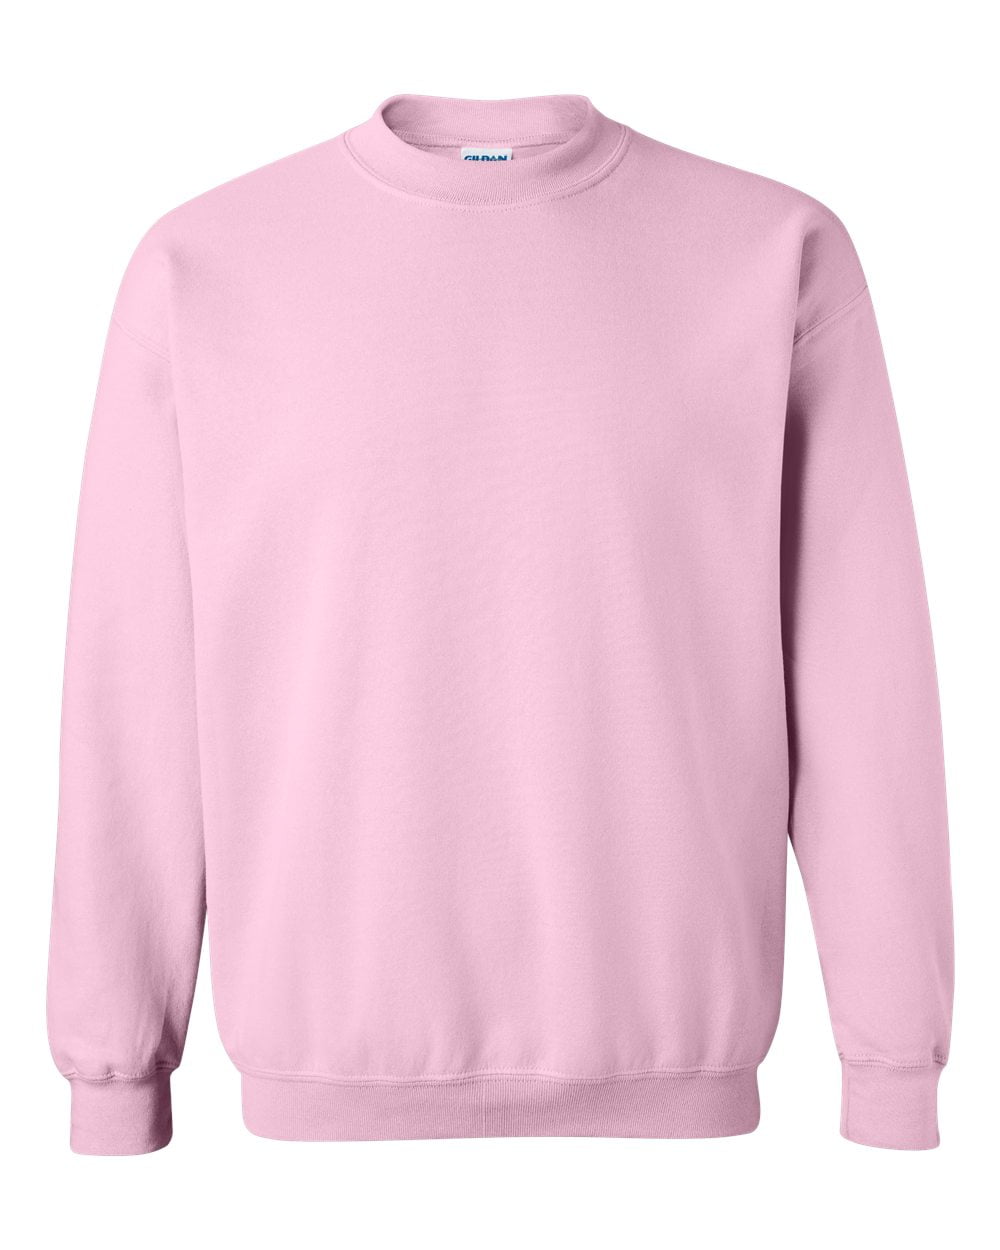 MOOCOM Mens Light Pink Crewneck Sweatshirt-Unisex 